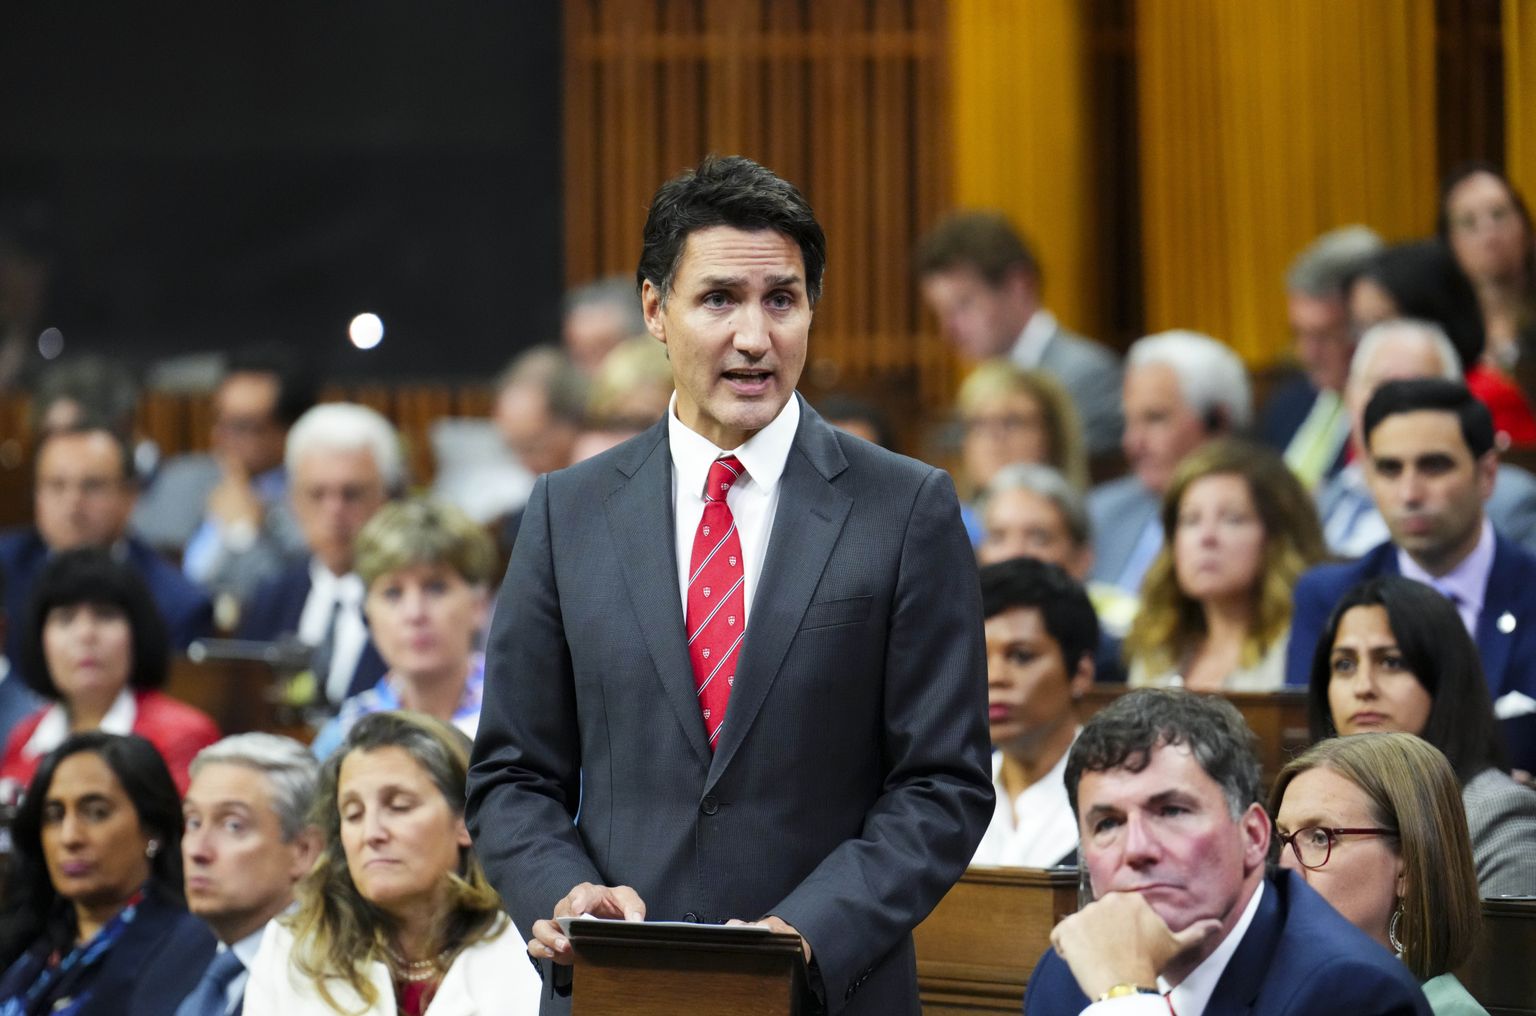 Justin Trudeau parlamendis kõnelemas.